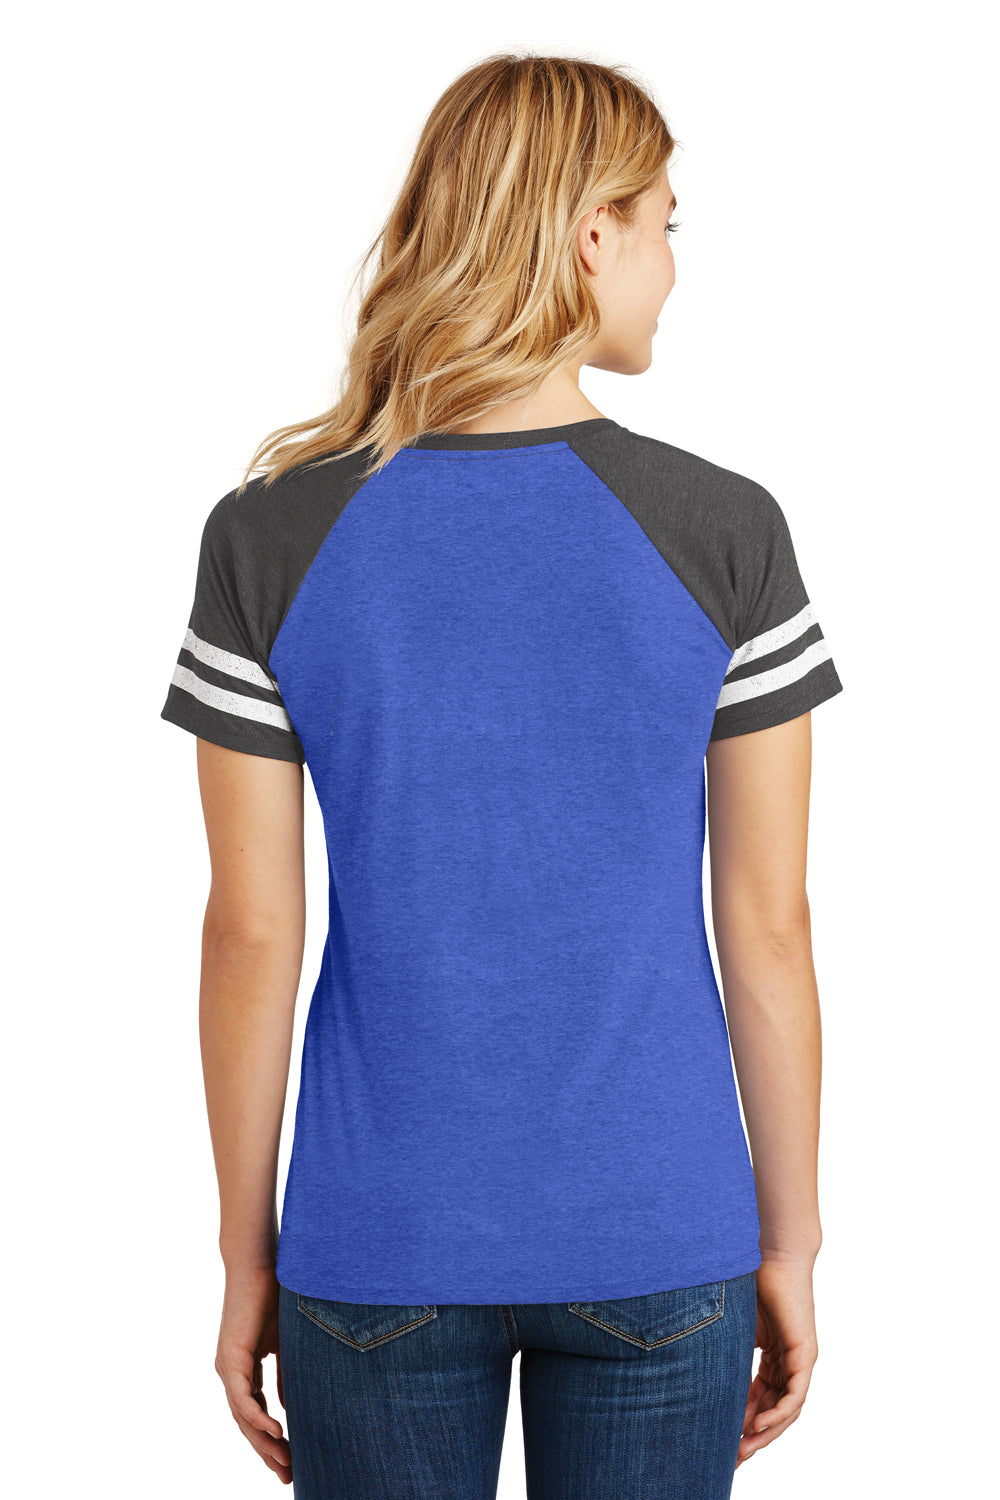 District DM476 Womens Game Short Sleeve V-Neck T-Shirt Heather Royal Blue/Charcoal Grey Back